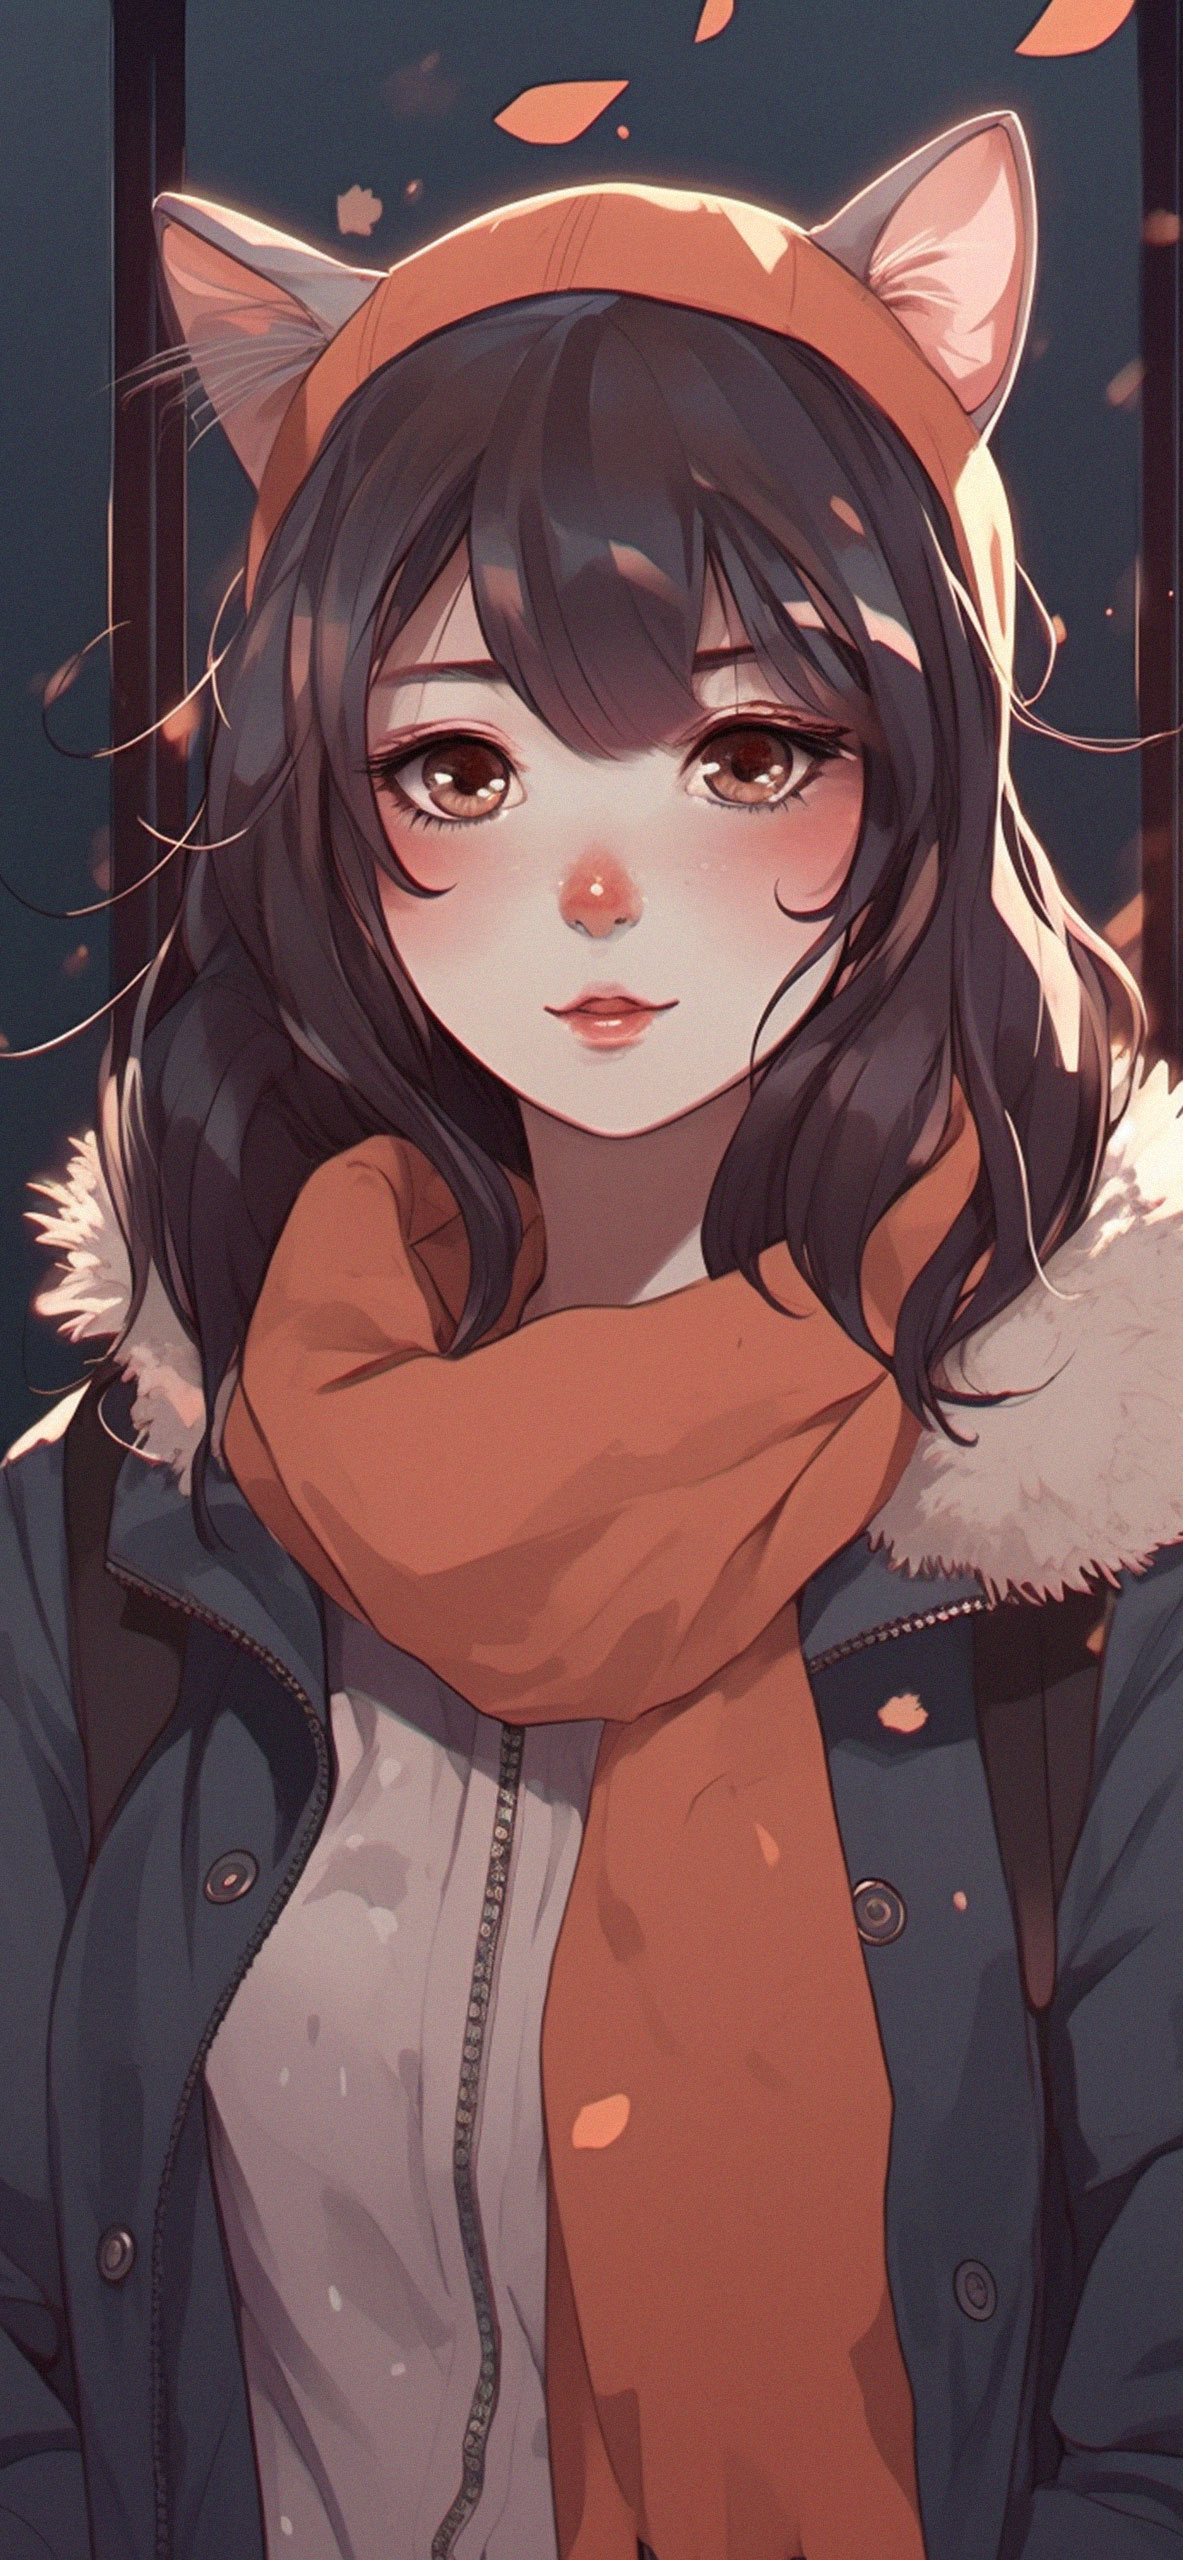 Cute Anime Girl with Cat Ears Wallpaper Cute Anime Girl Wallpa